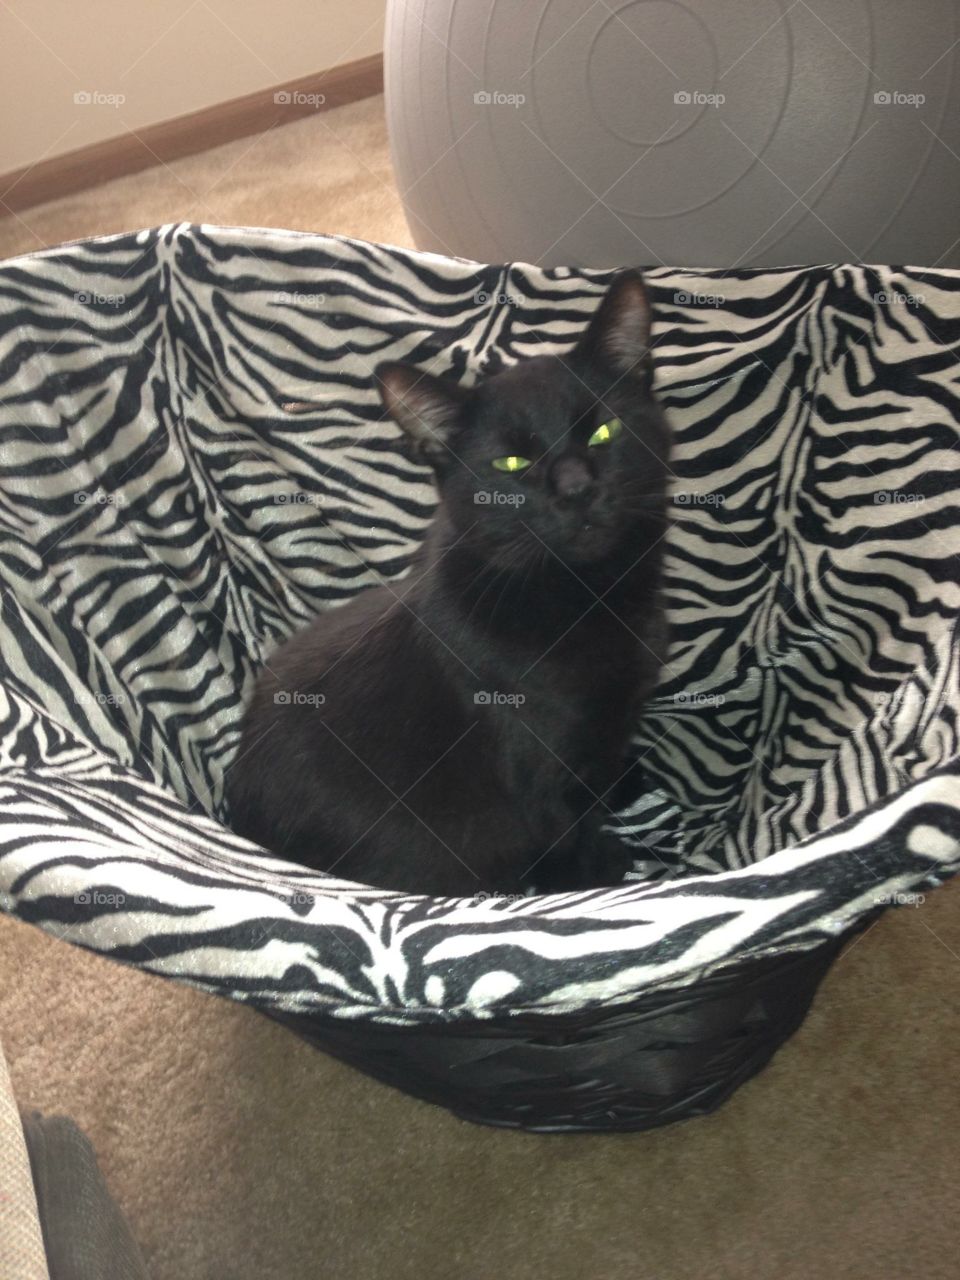 Black cat sitting in Basket